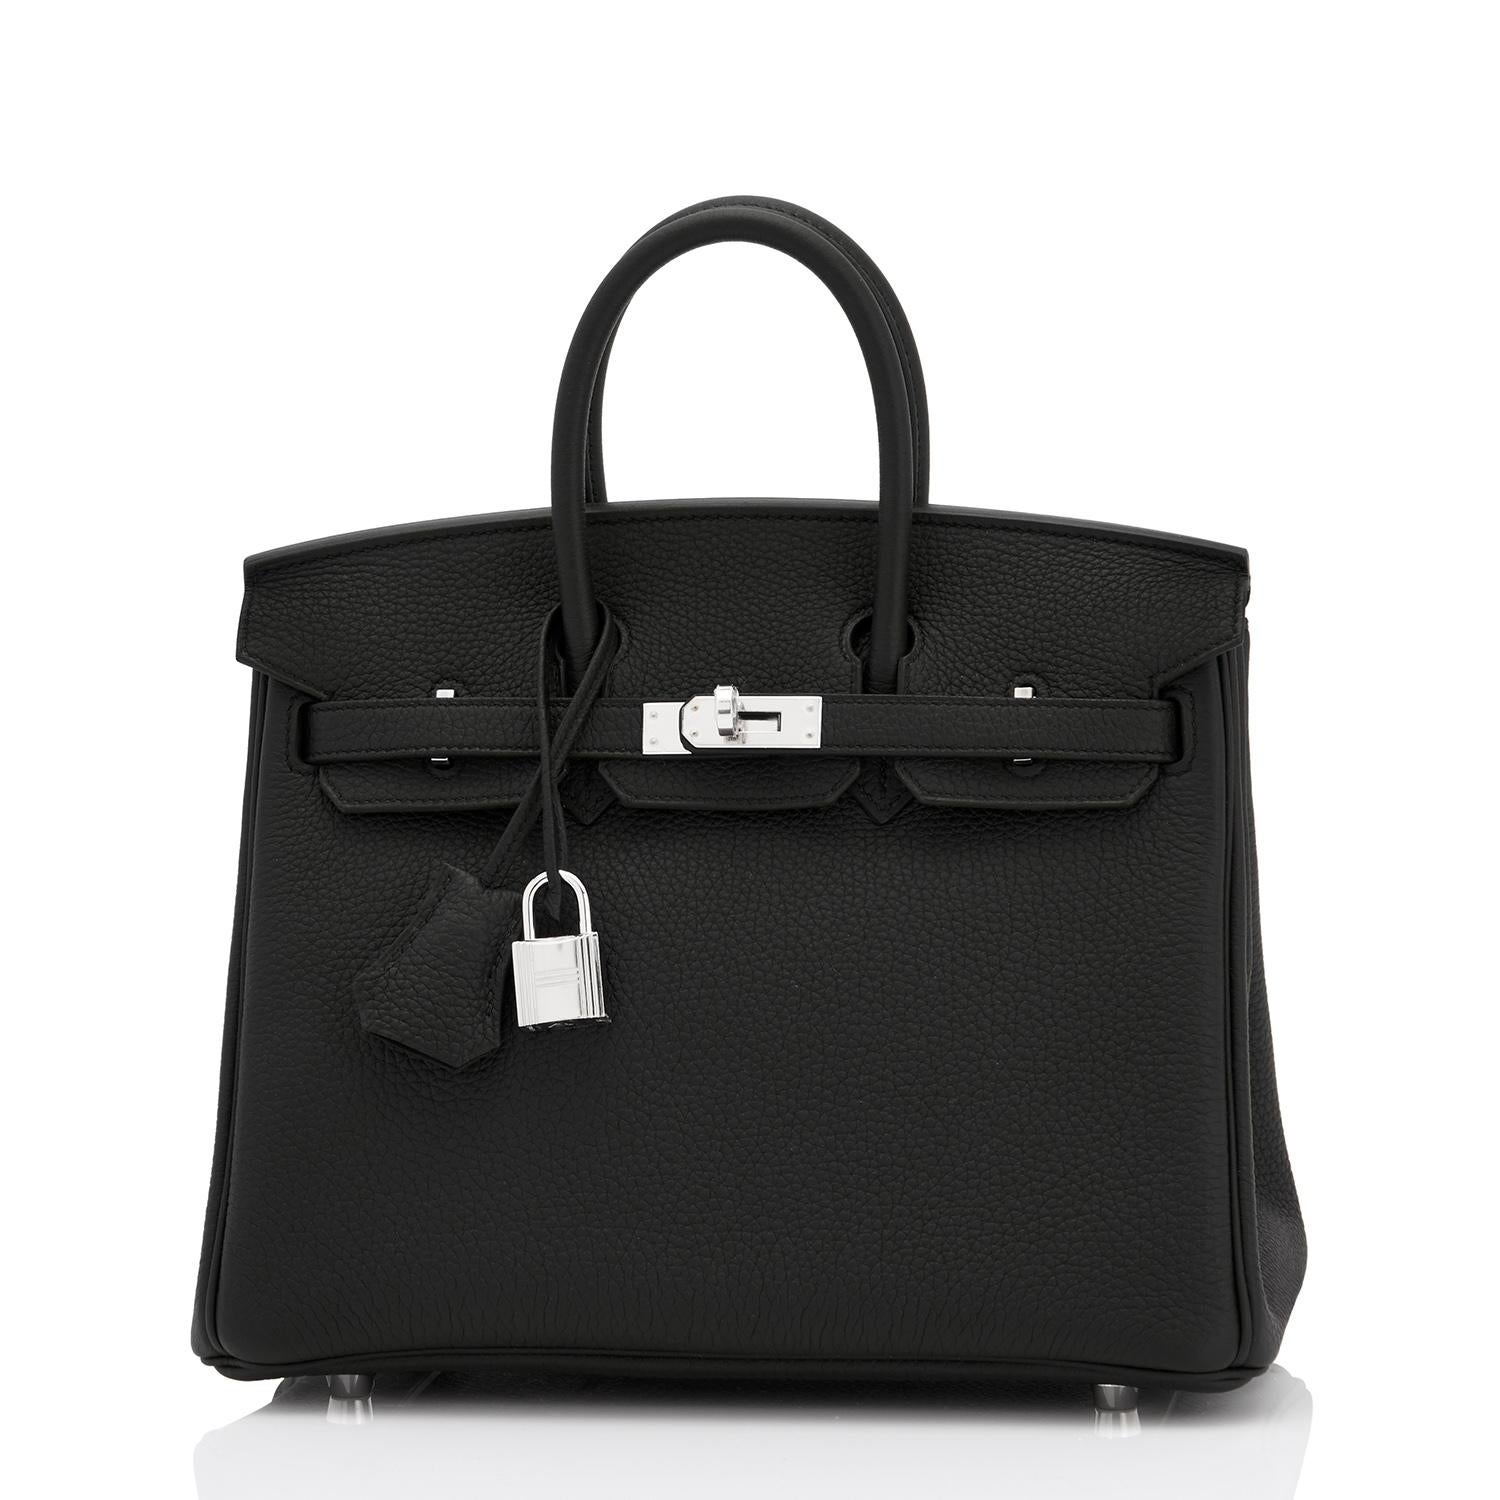 Hermes Birkin 25cm Black Togo Palladium Bag NEW 5